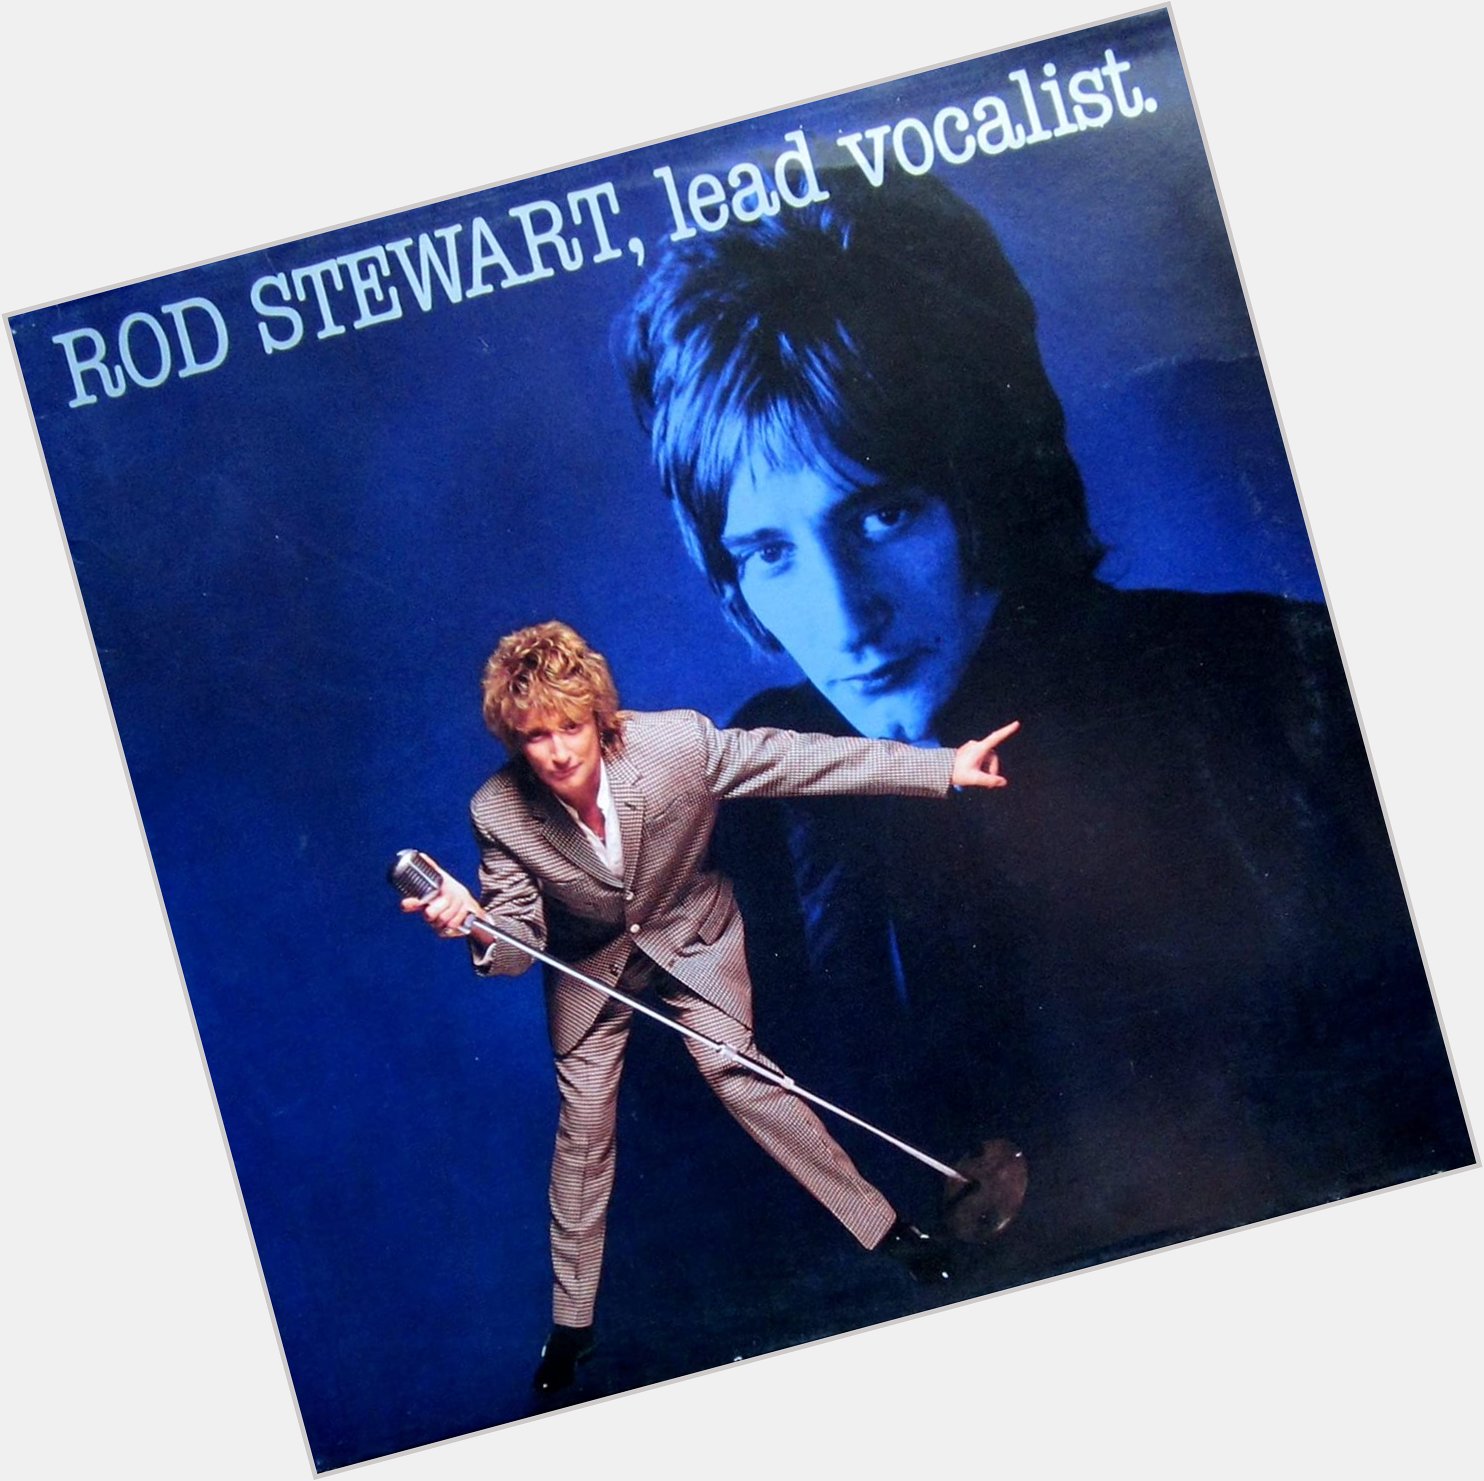                         Happy Birthday Rod Stewart!!  